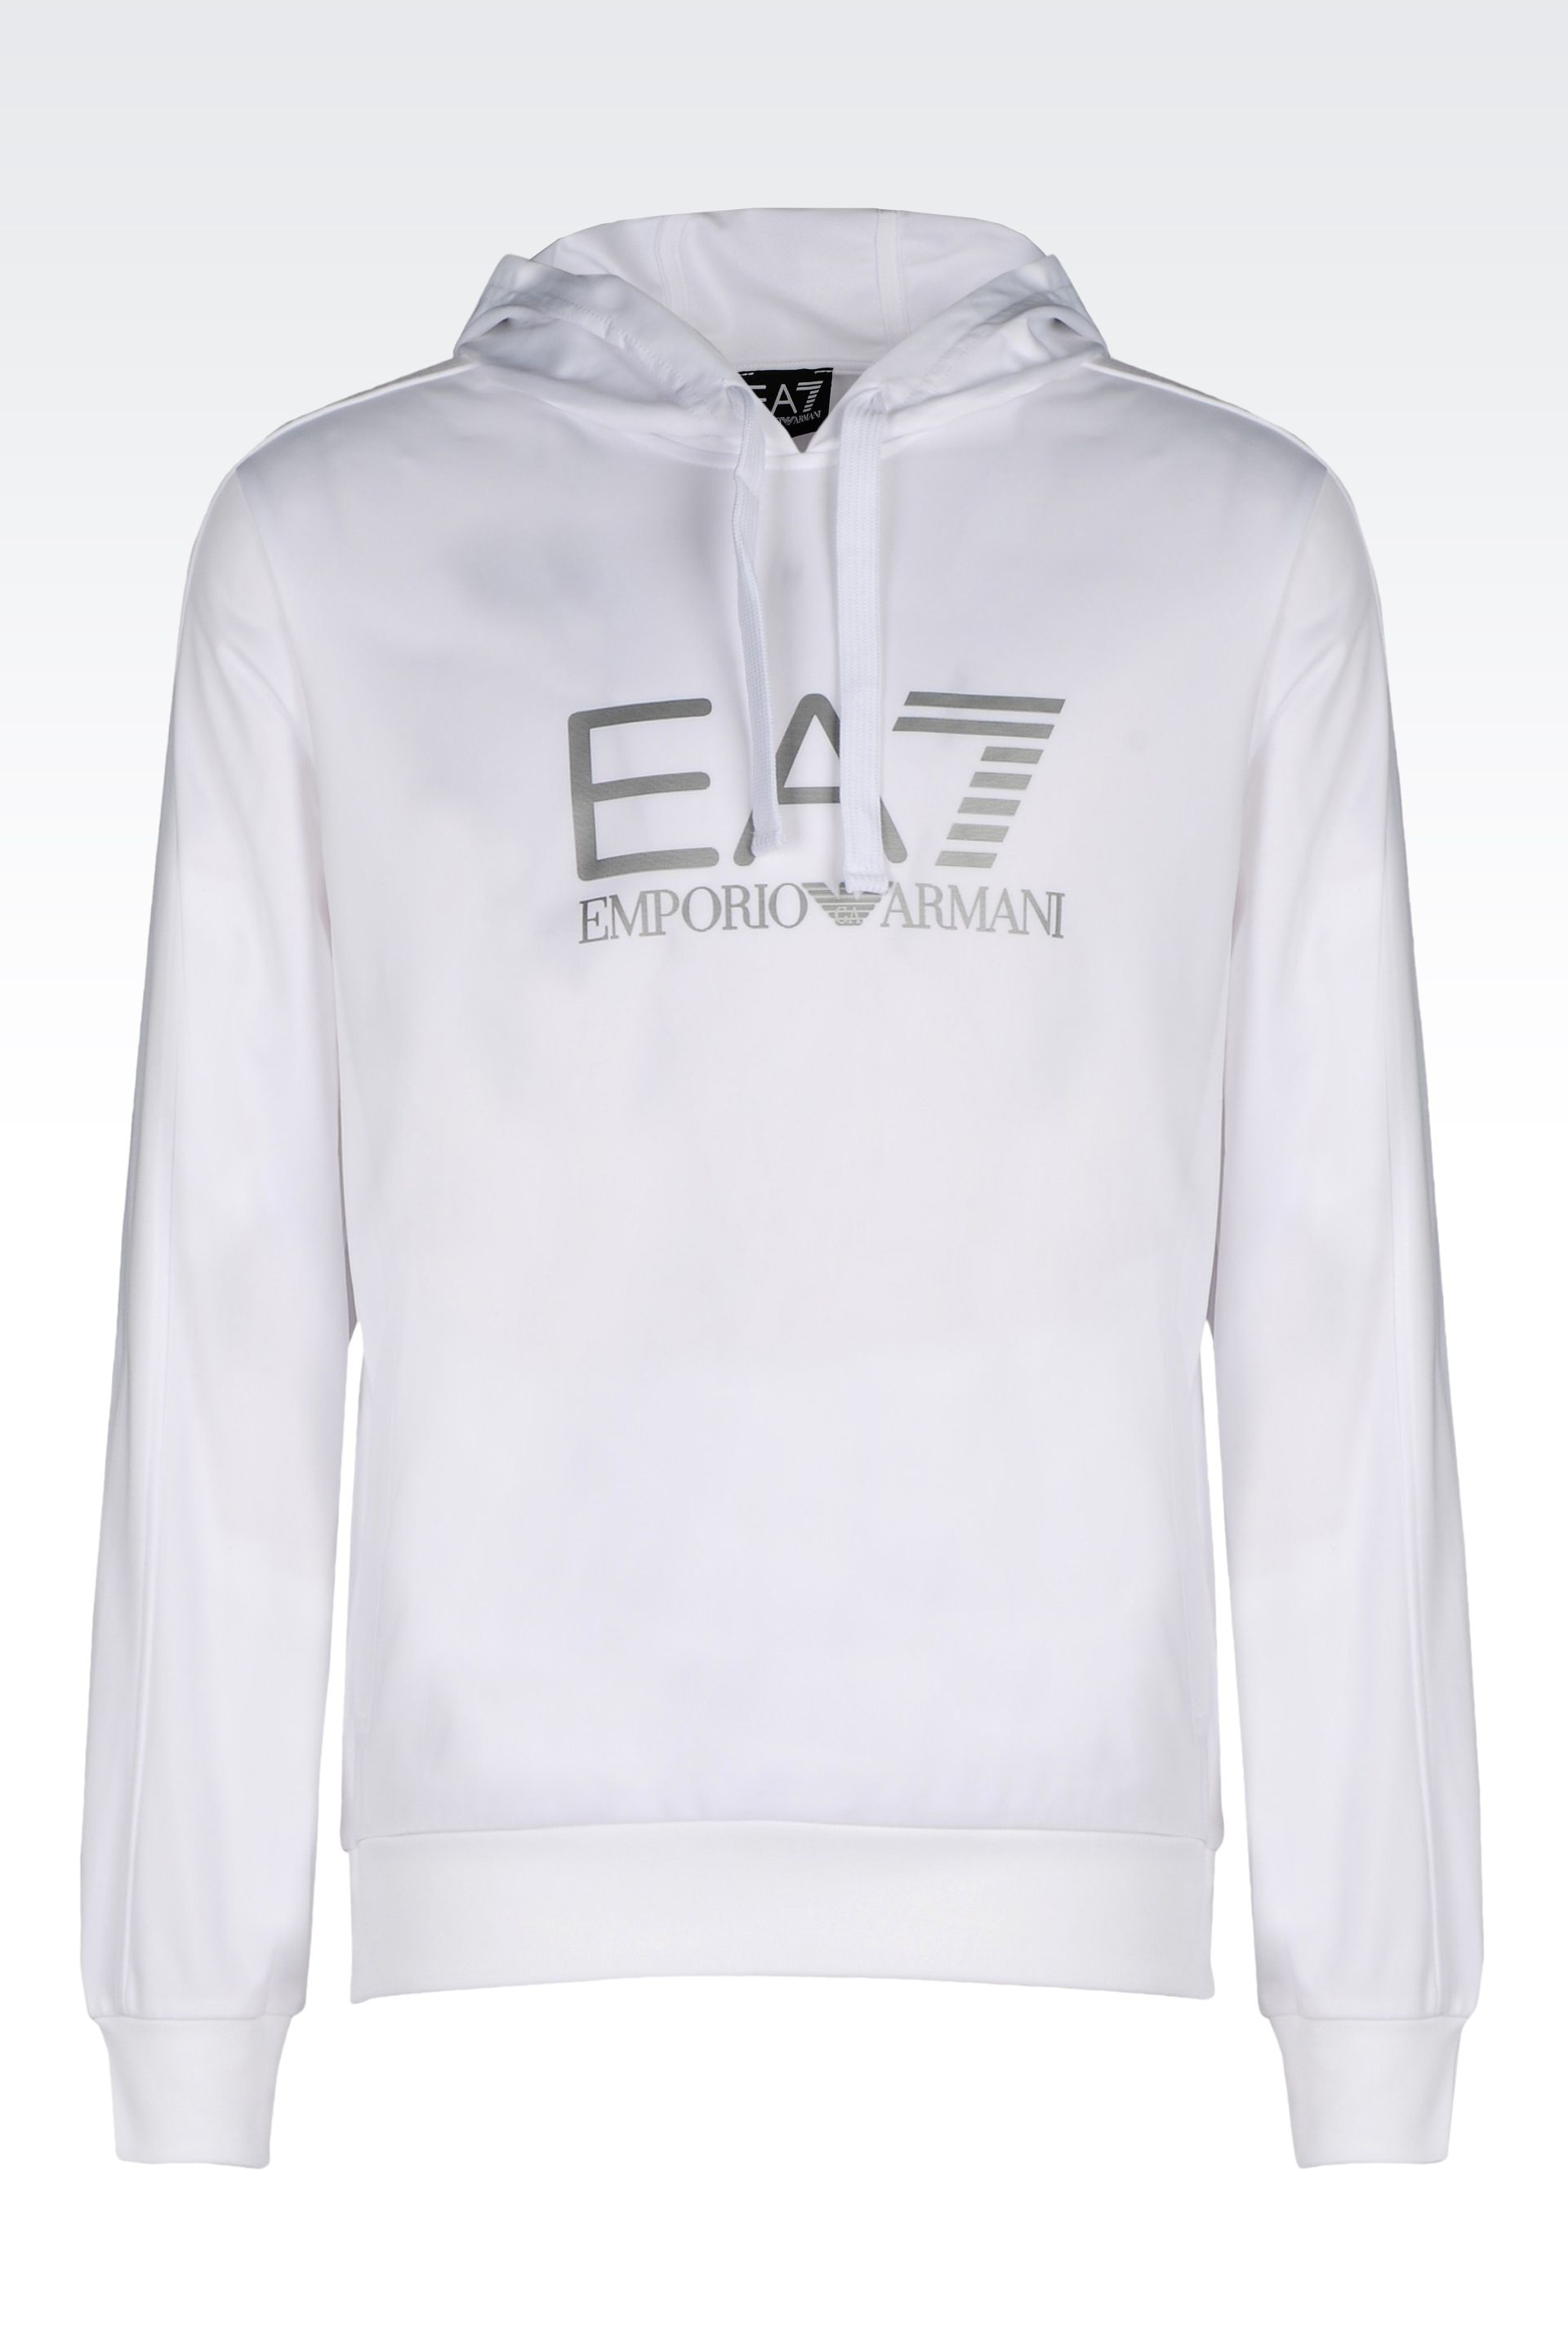 ea7 white jumper